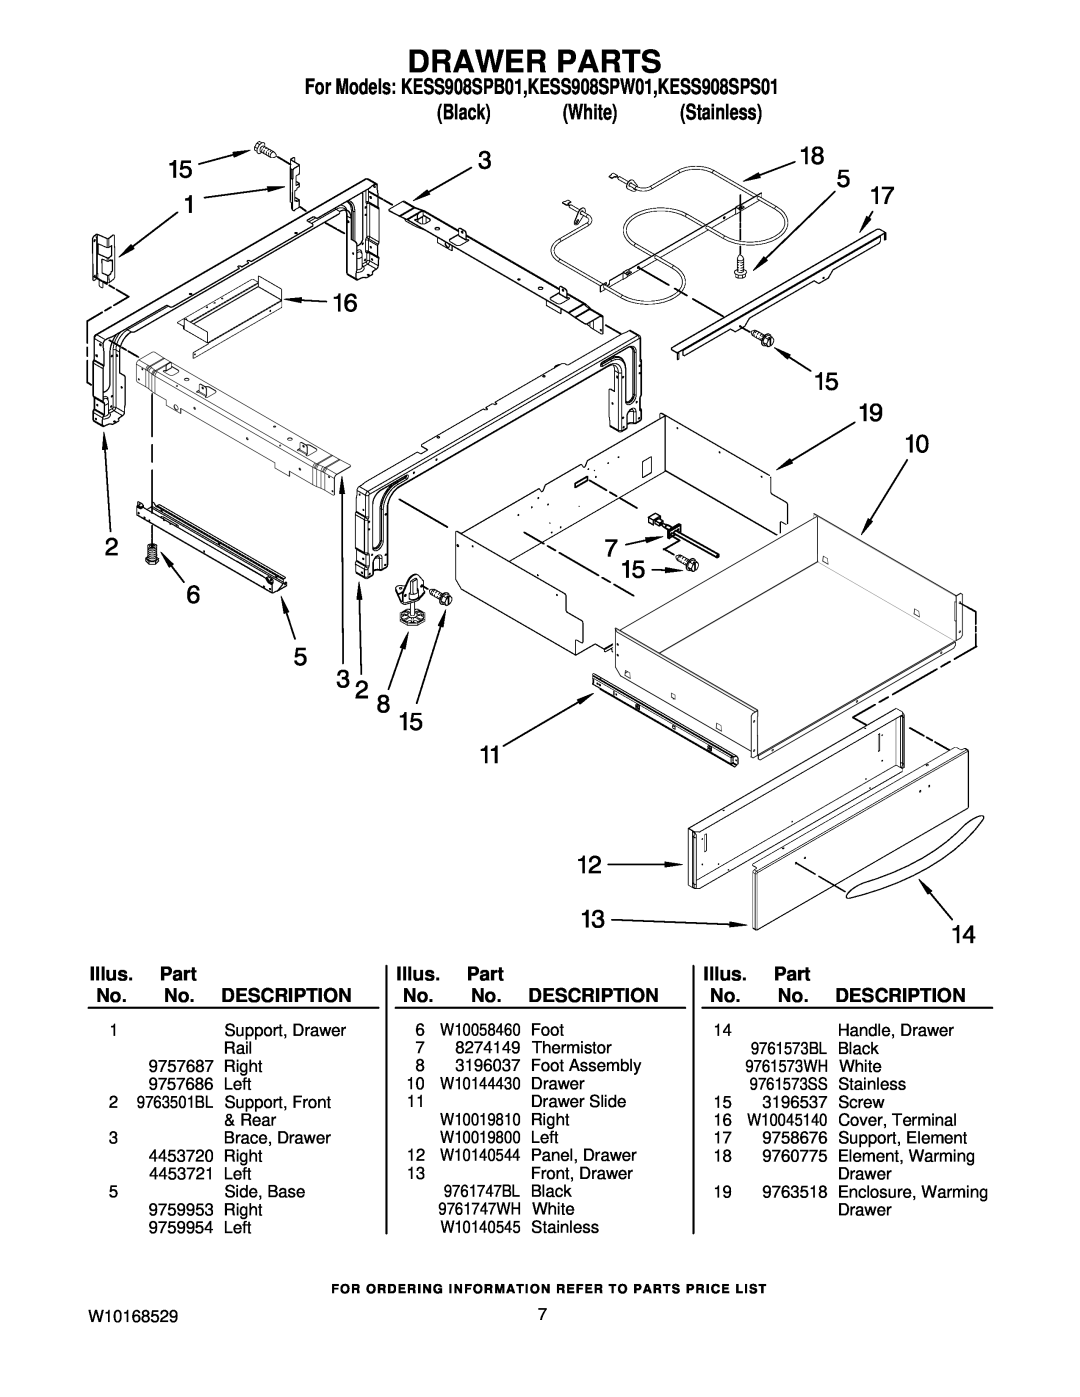 KitchenAid manual Drawer Parts, For Models KESS908SPB01,KESS908SPW01,KESS908SPS01, Black White Stainless 